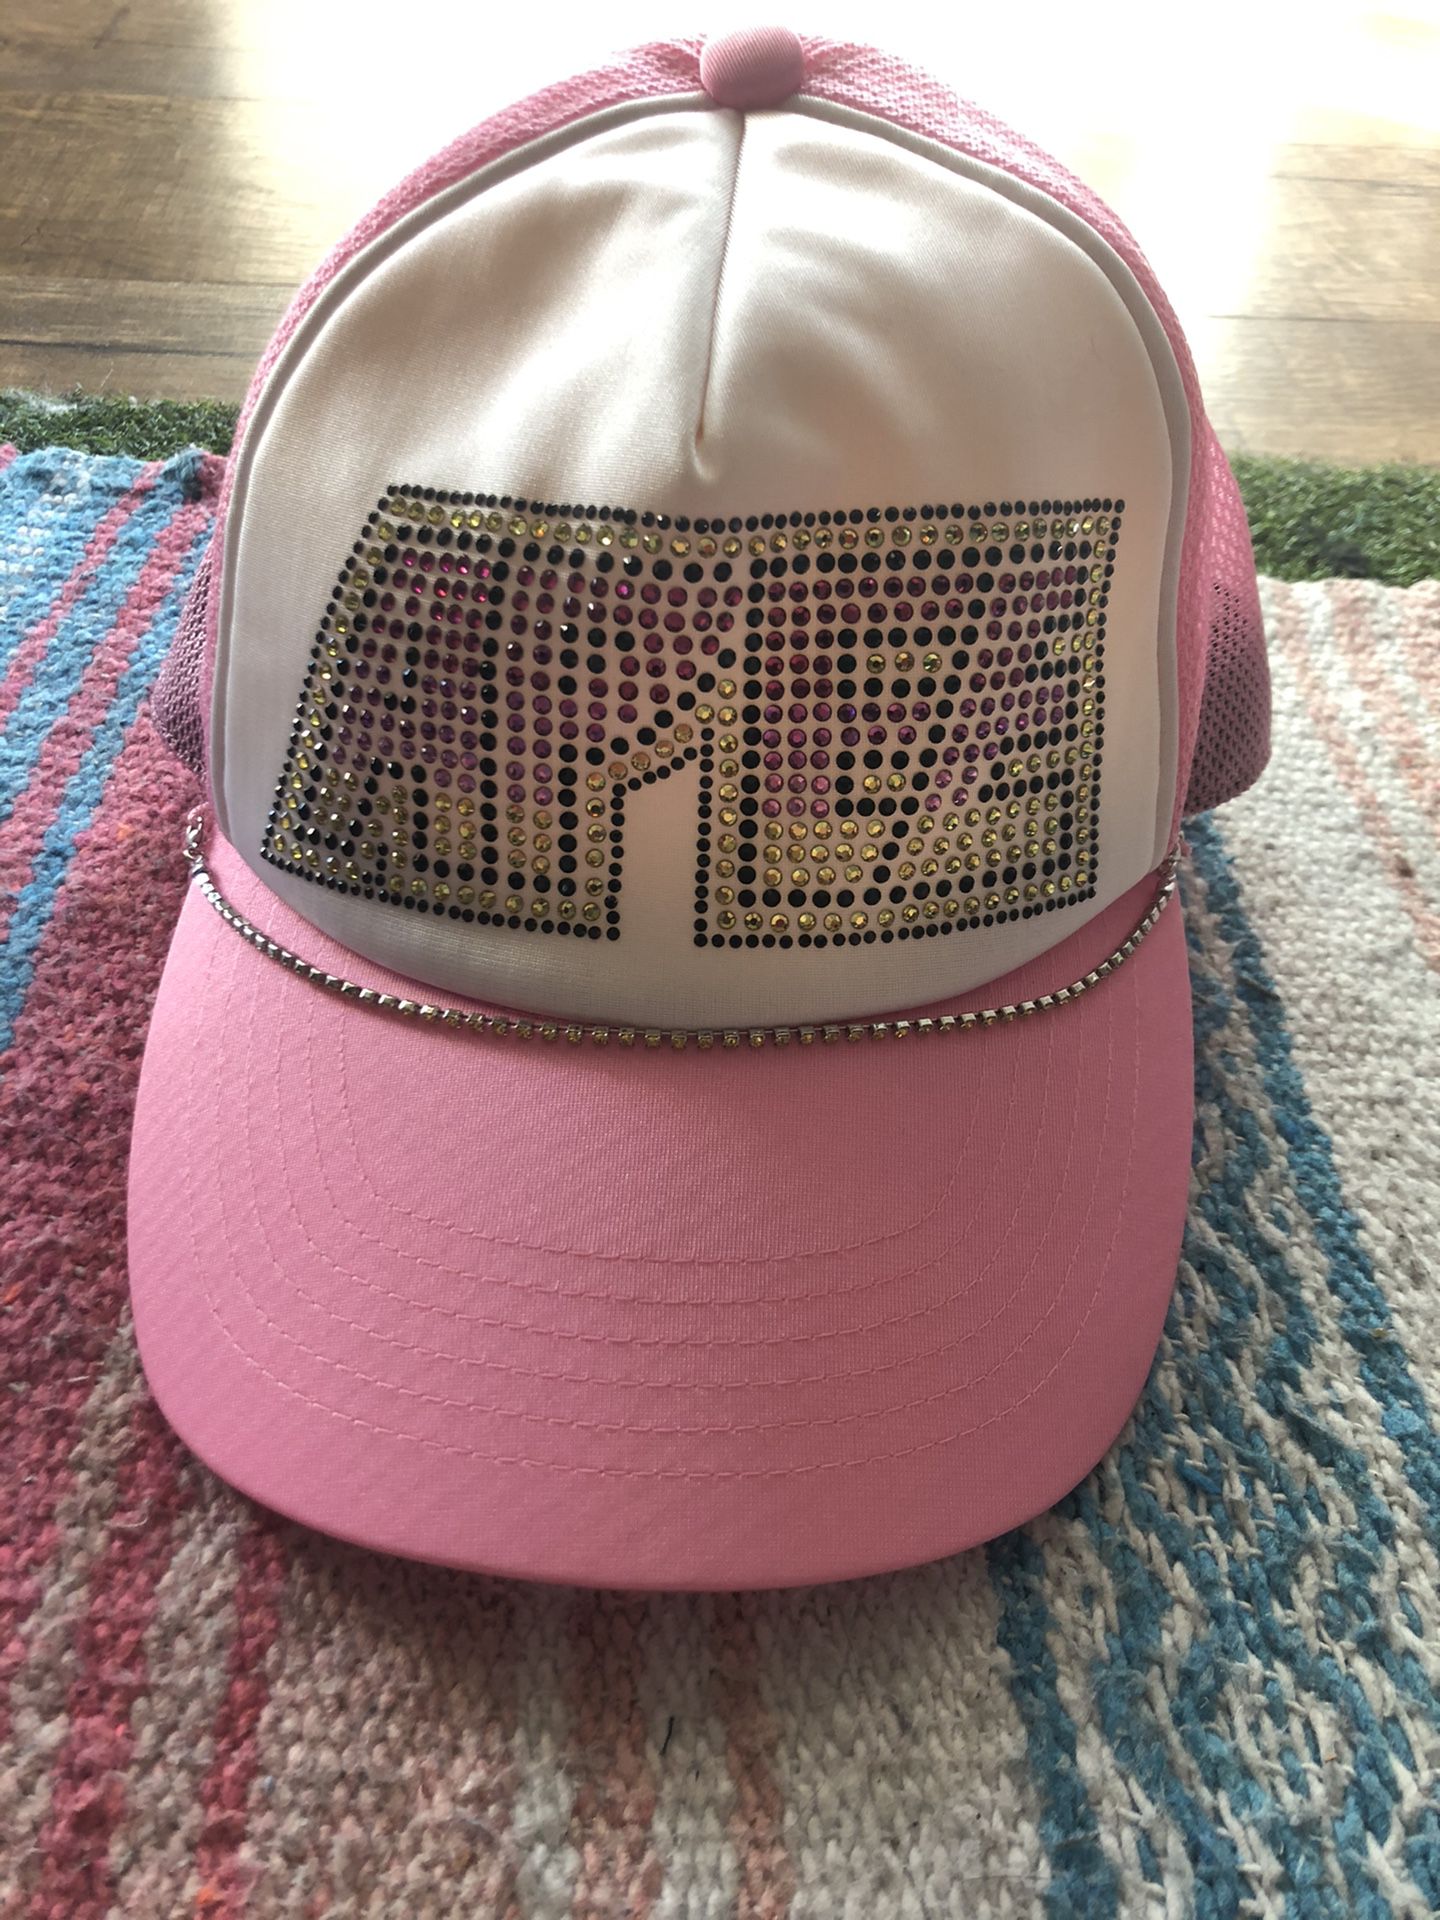 New Bape Swarovski Kiss Logo Trucker Hat Pink